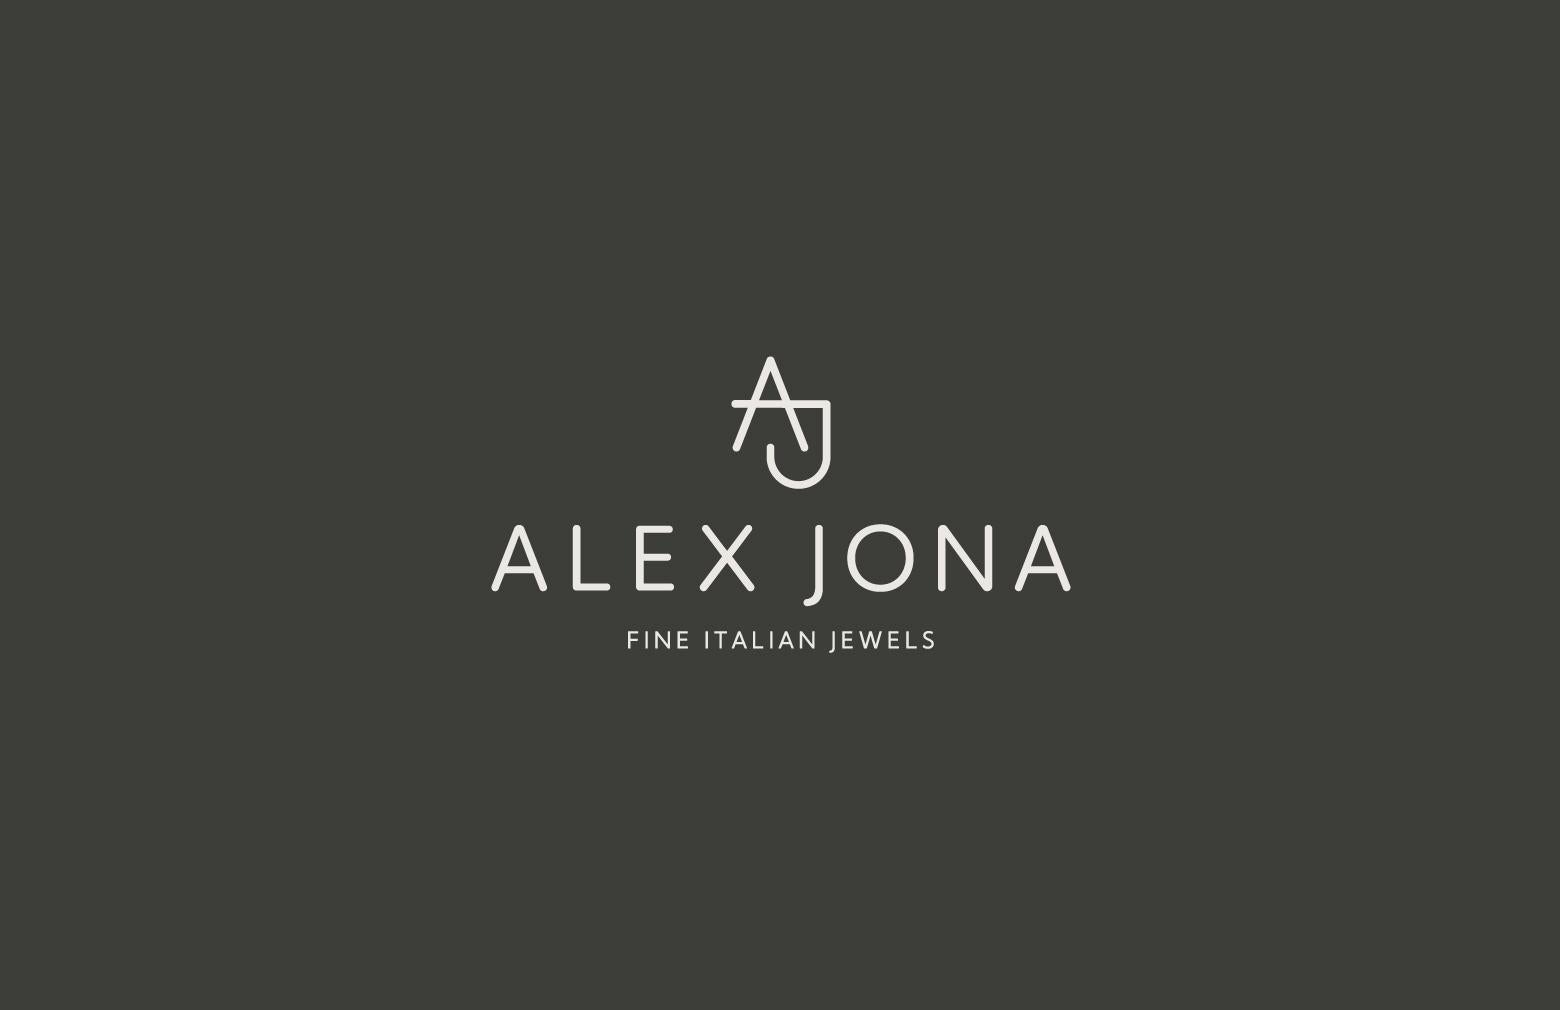 Alex Jona Black Diamond 18 Karat White Gold Oval Hoop Earrings For Sale 6